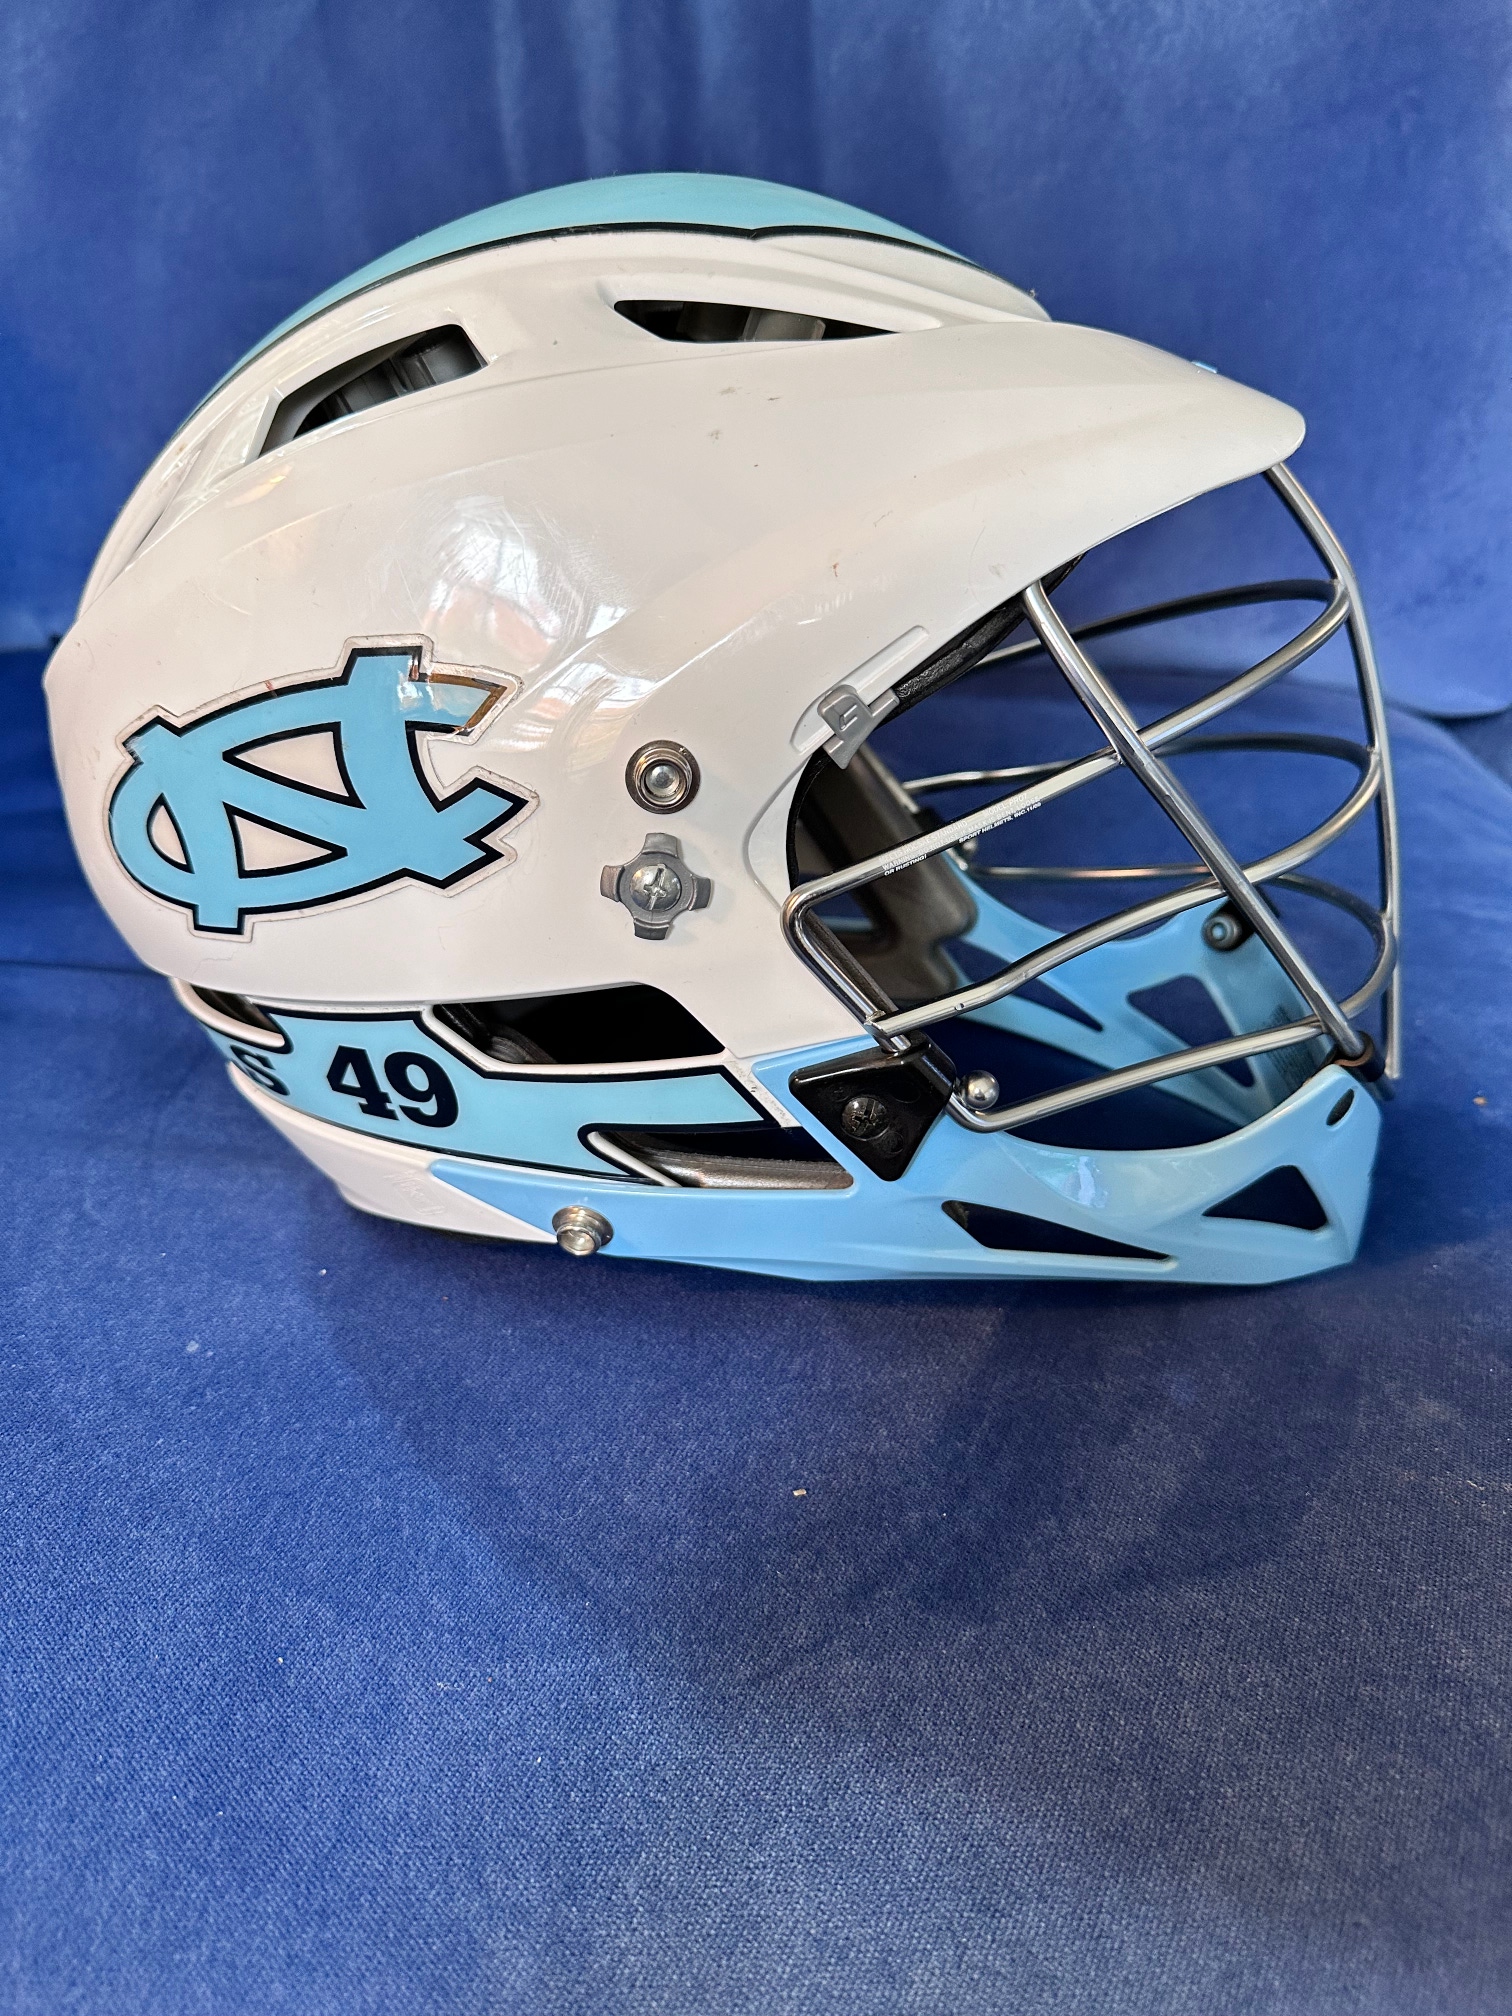 New North Carolina Tarheel Player's Cascade Pro-7 Helmet